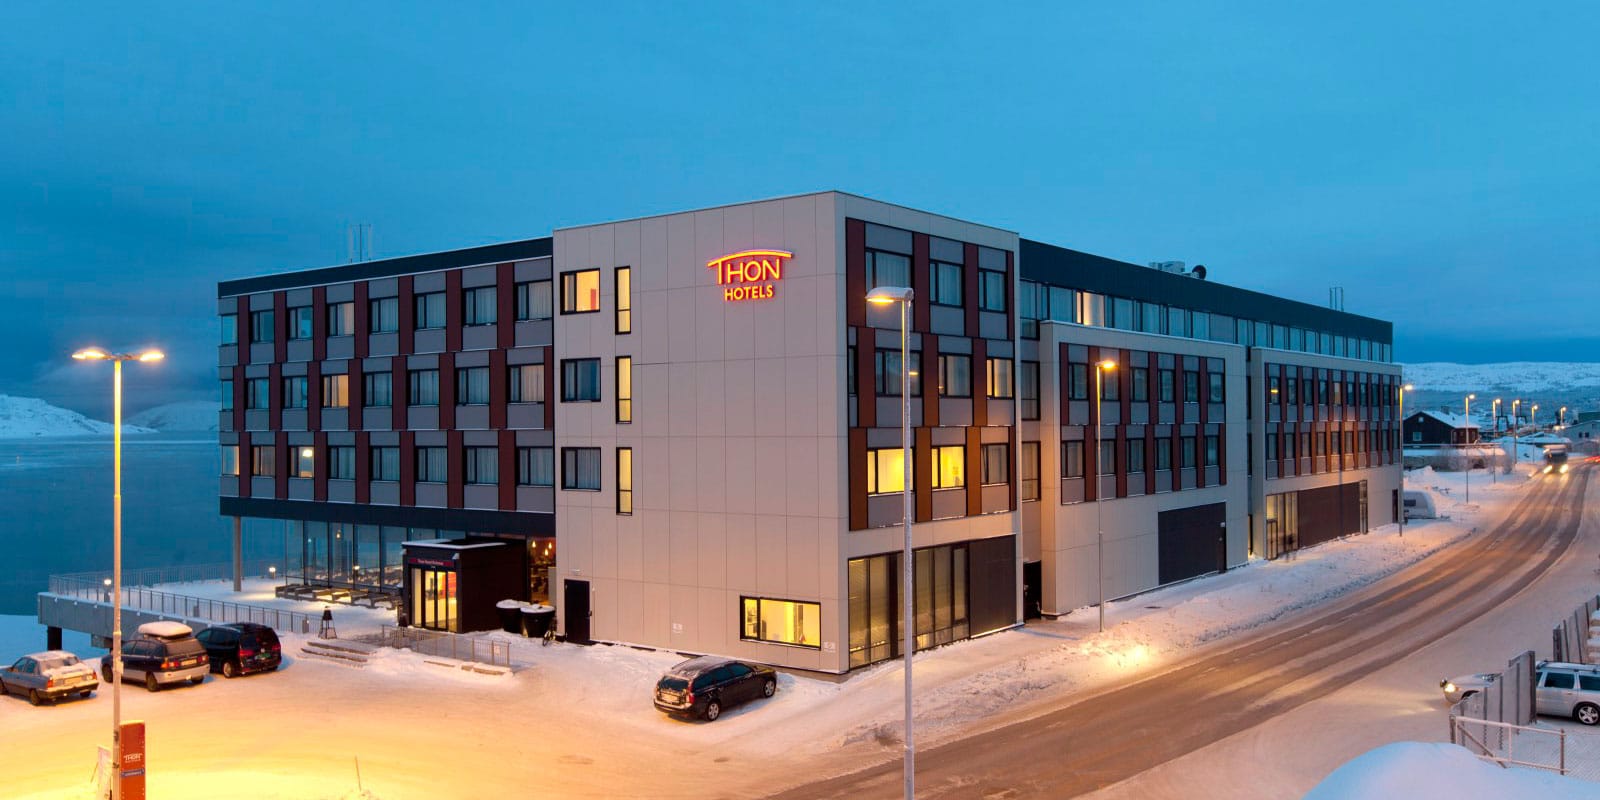 Thon Hotel Kirkenes fasade